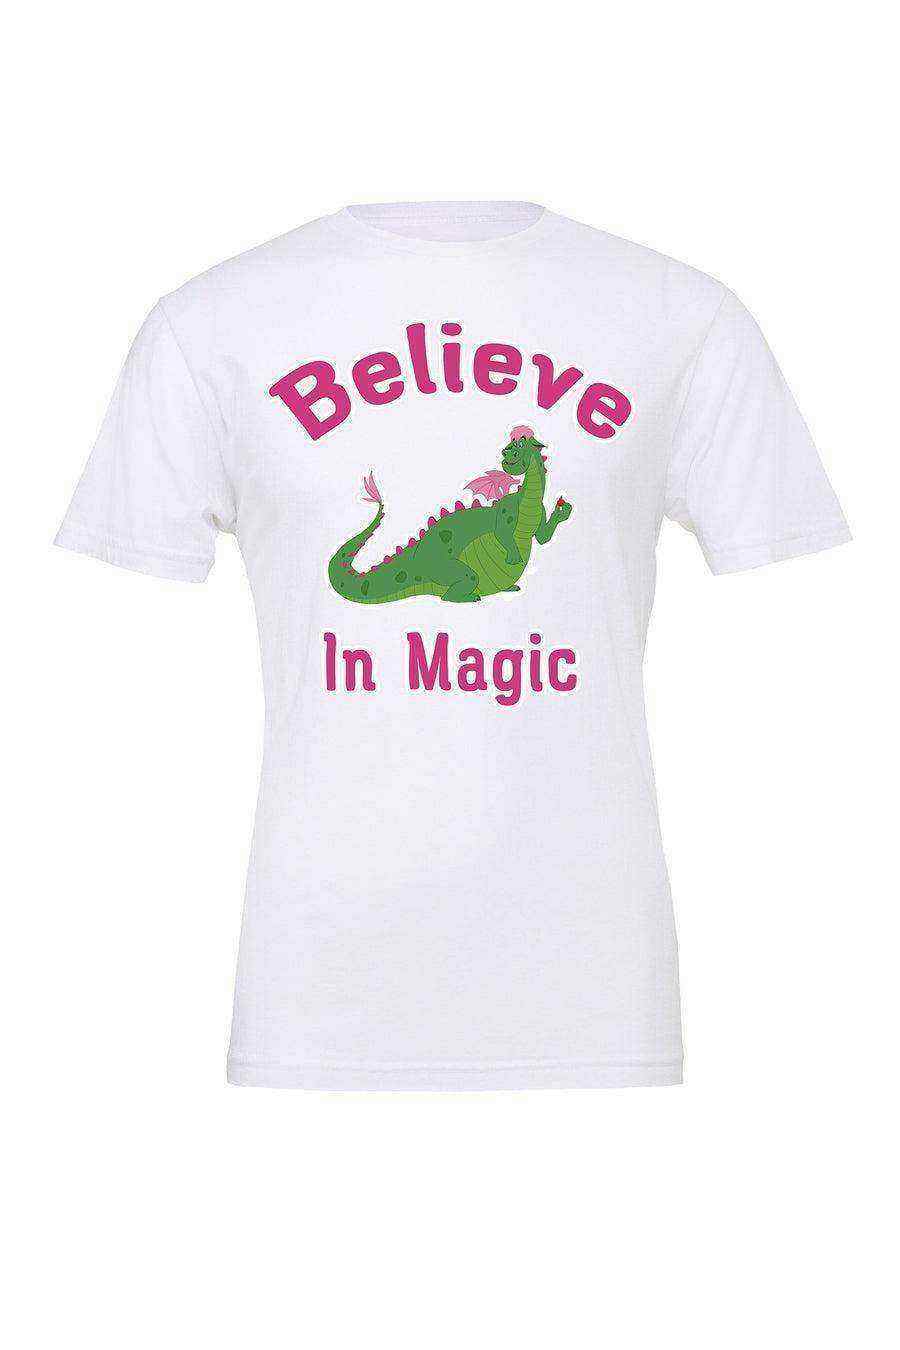 Toddler | Petes Dragon Tee | Believe In Magic - Dylan's Tees